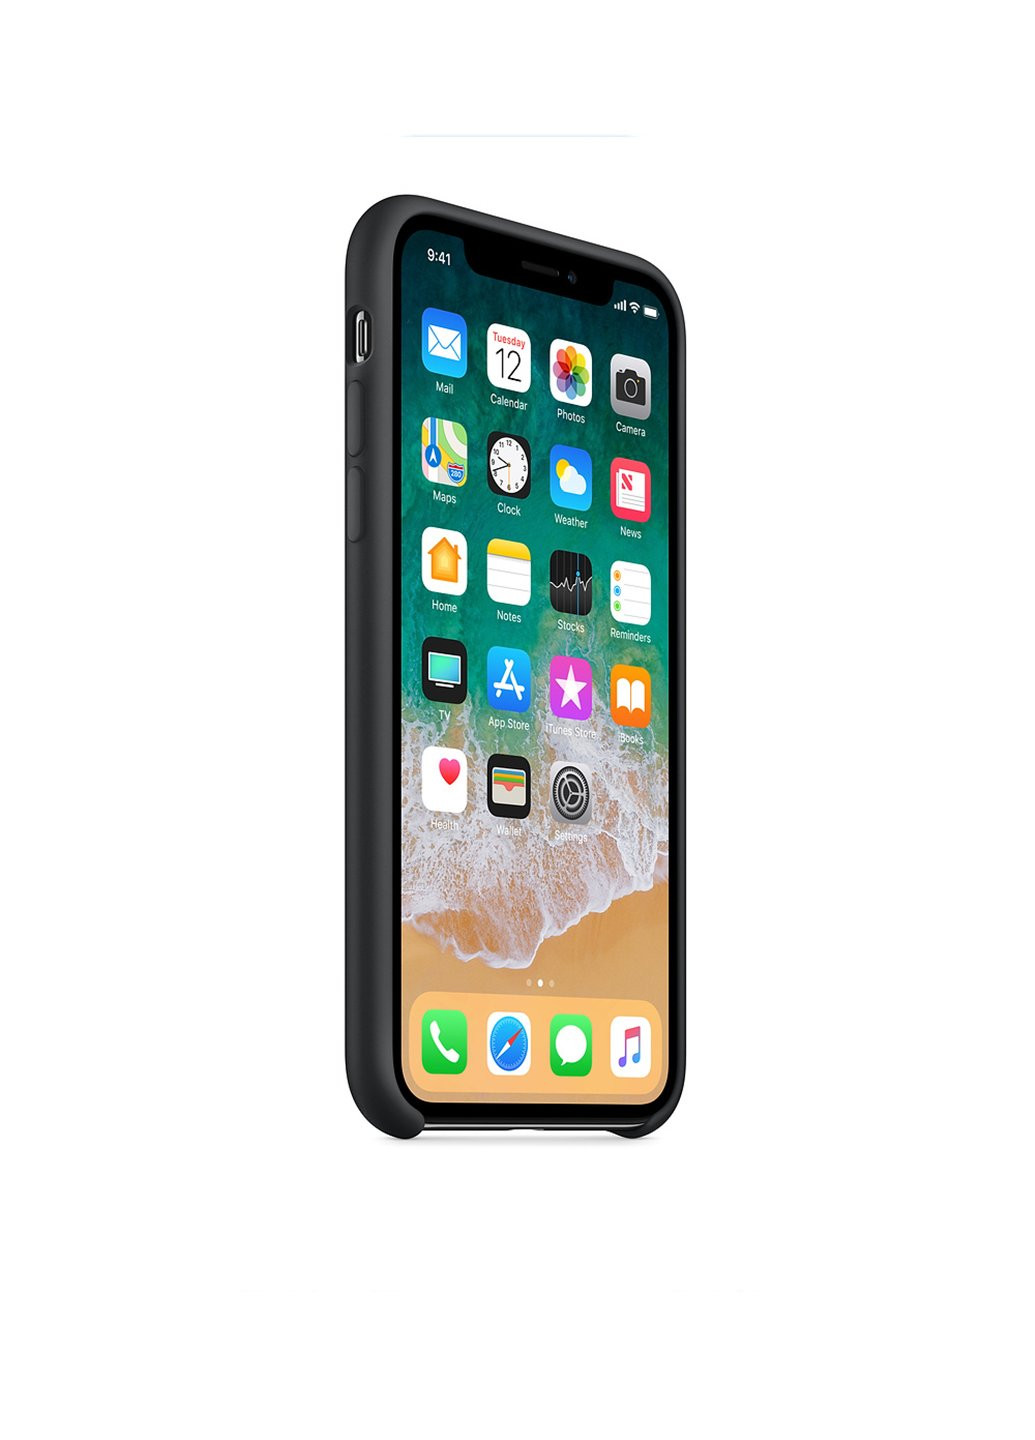 Чехол Silicone case for iPhone Xs Max Black Apple (96874976)